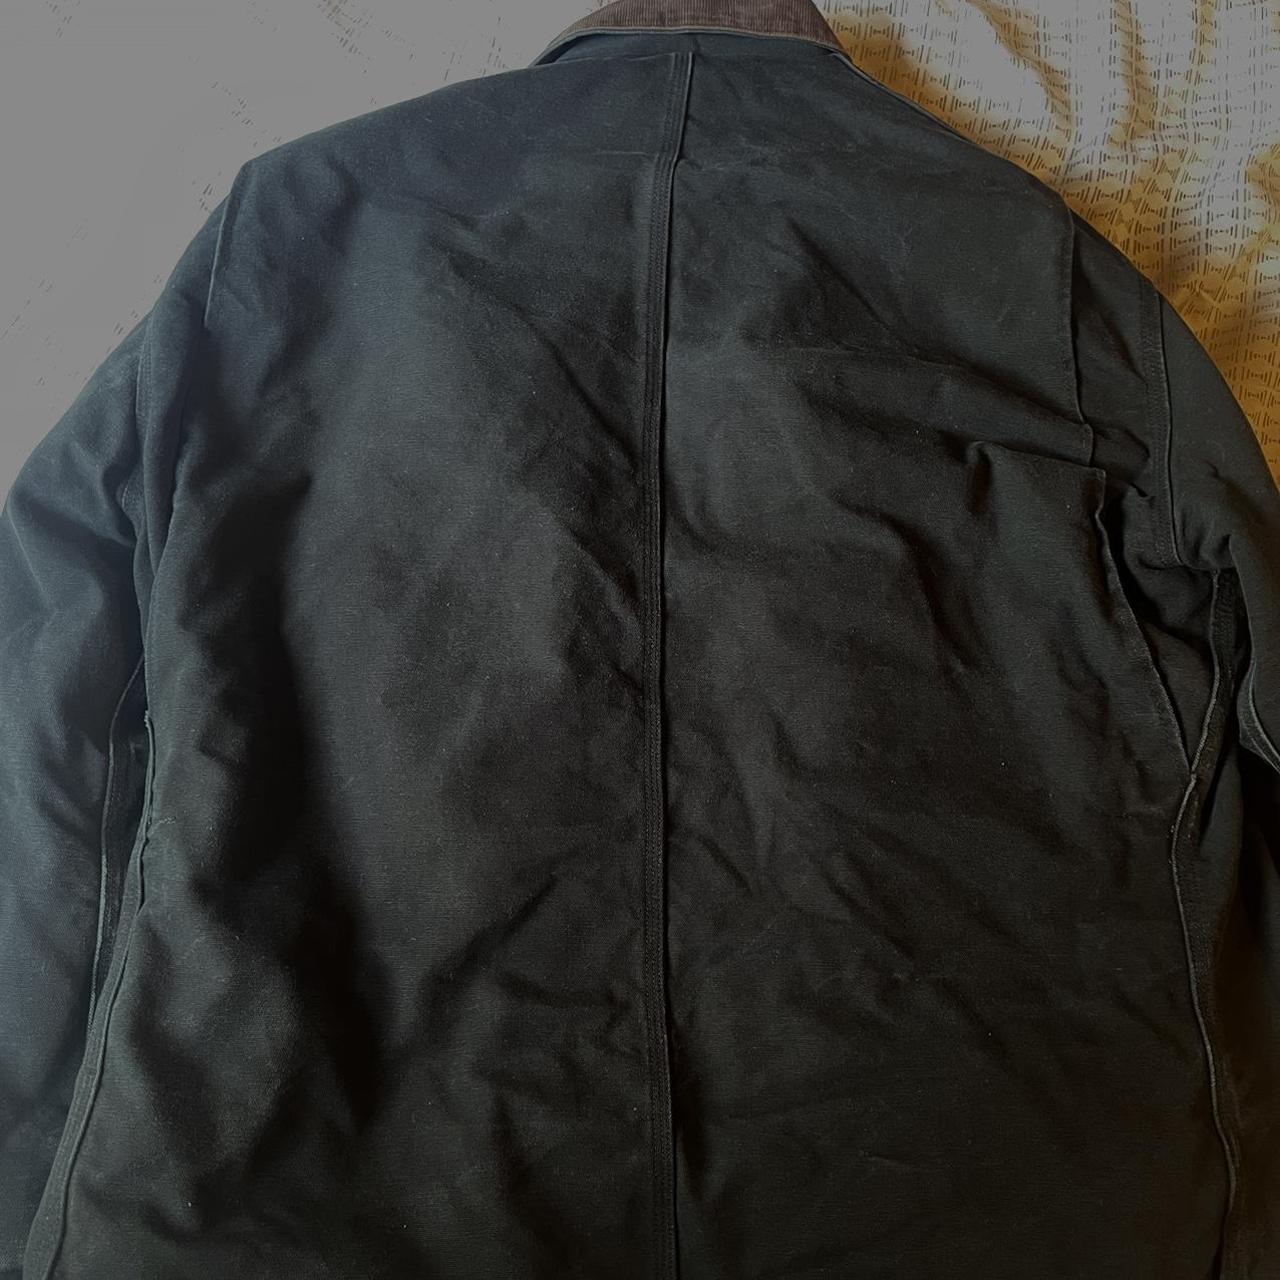 Vintage Carhartt Jacket Great Condition Great Fade... - Depop